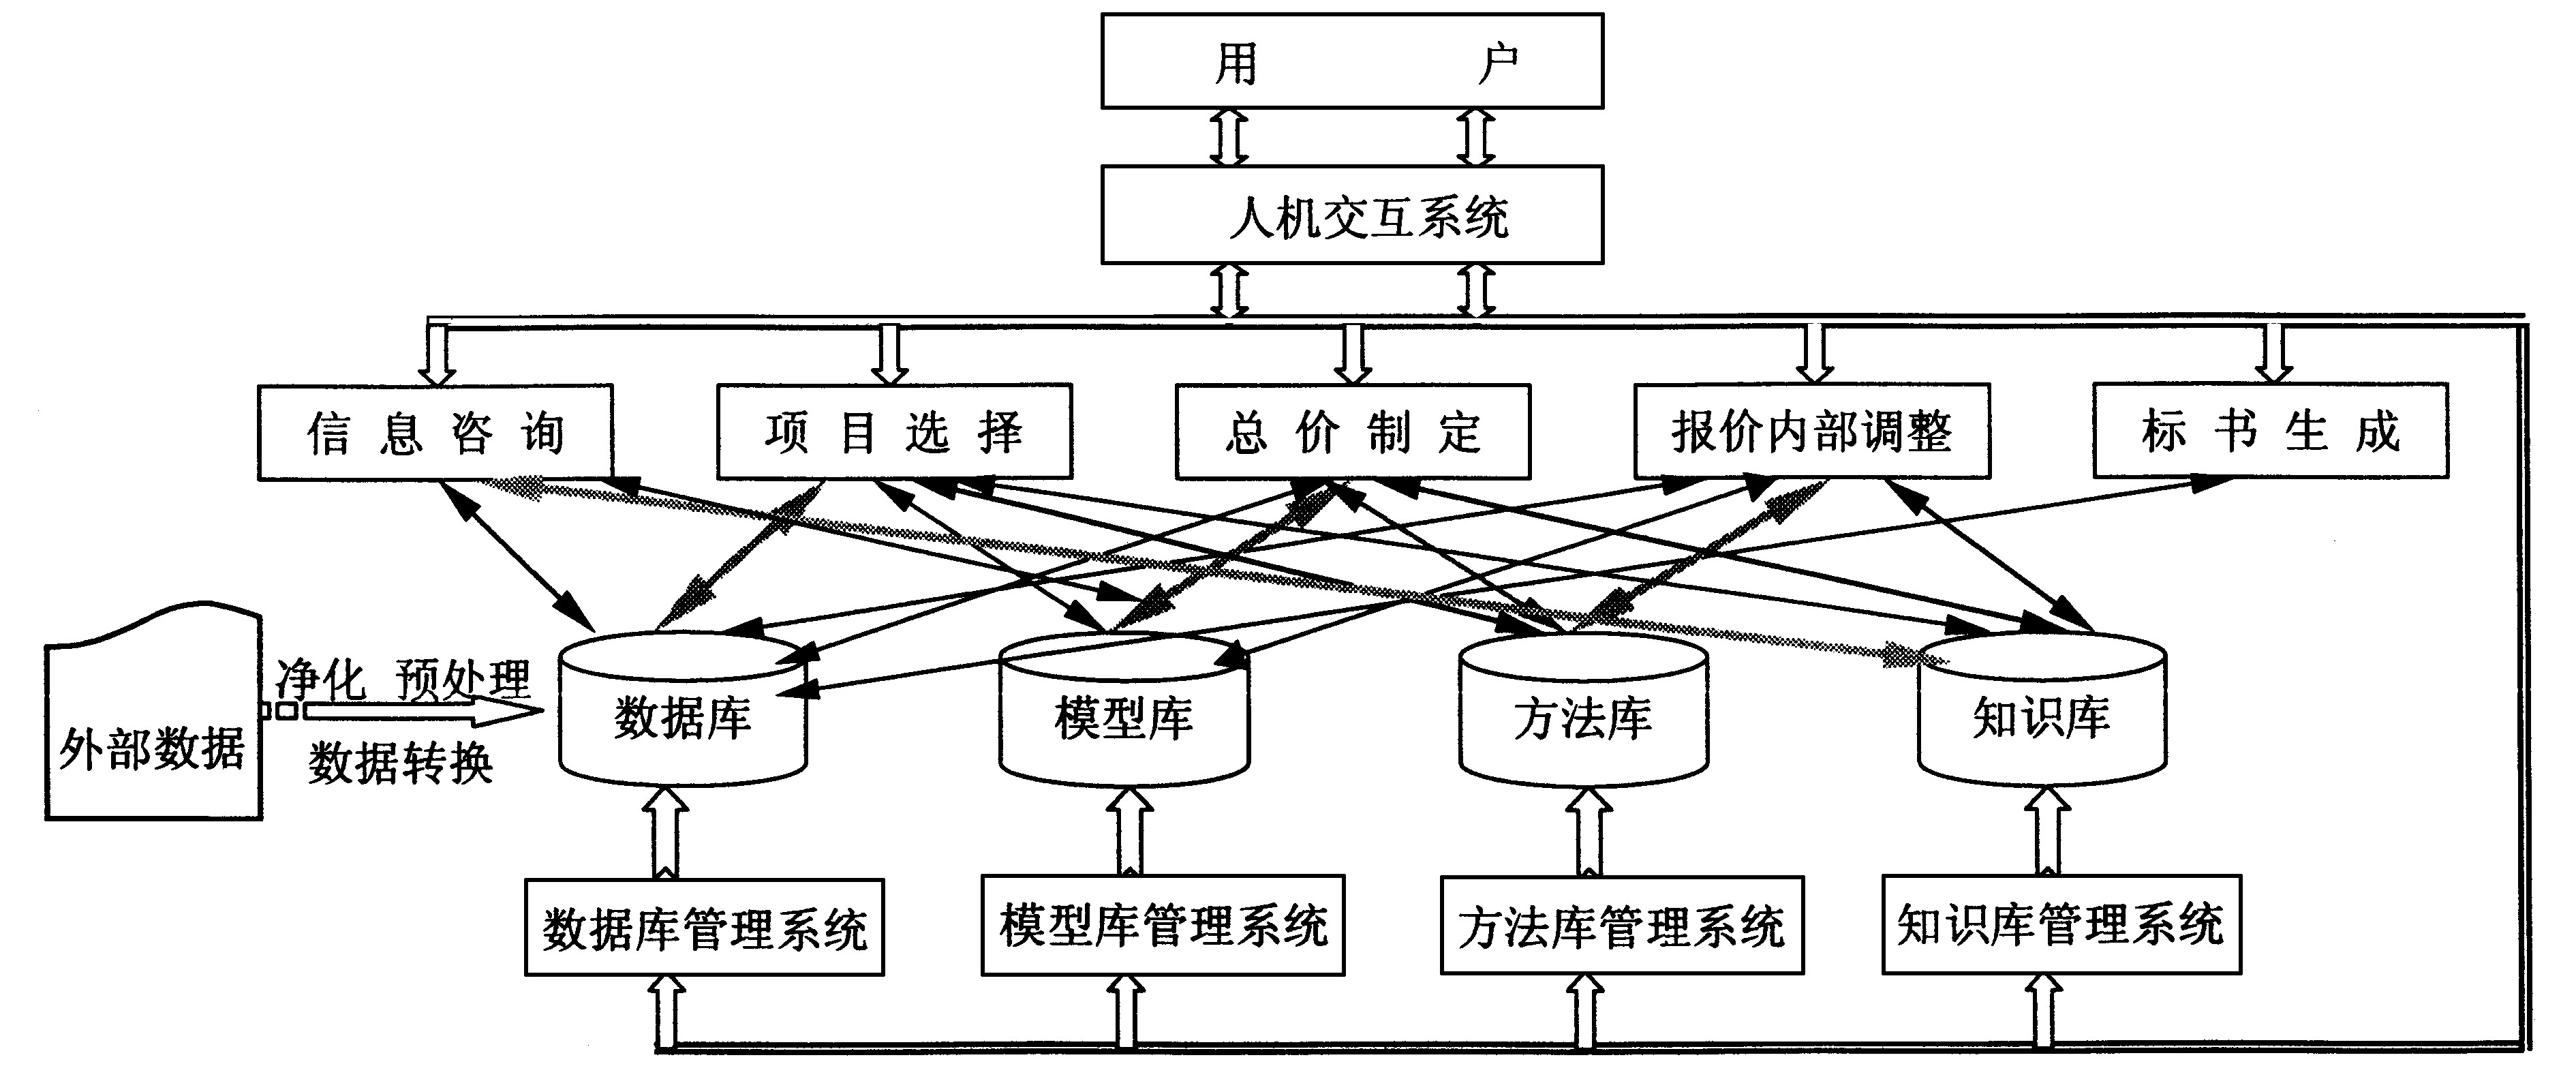 图1 PBDSS结构体系